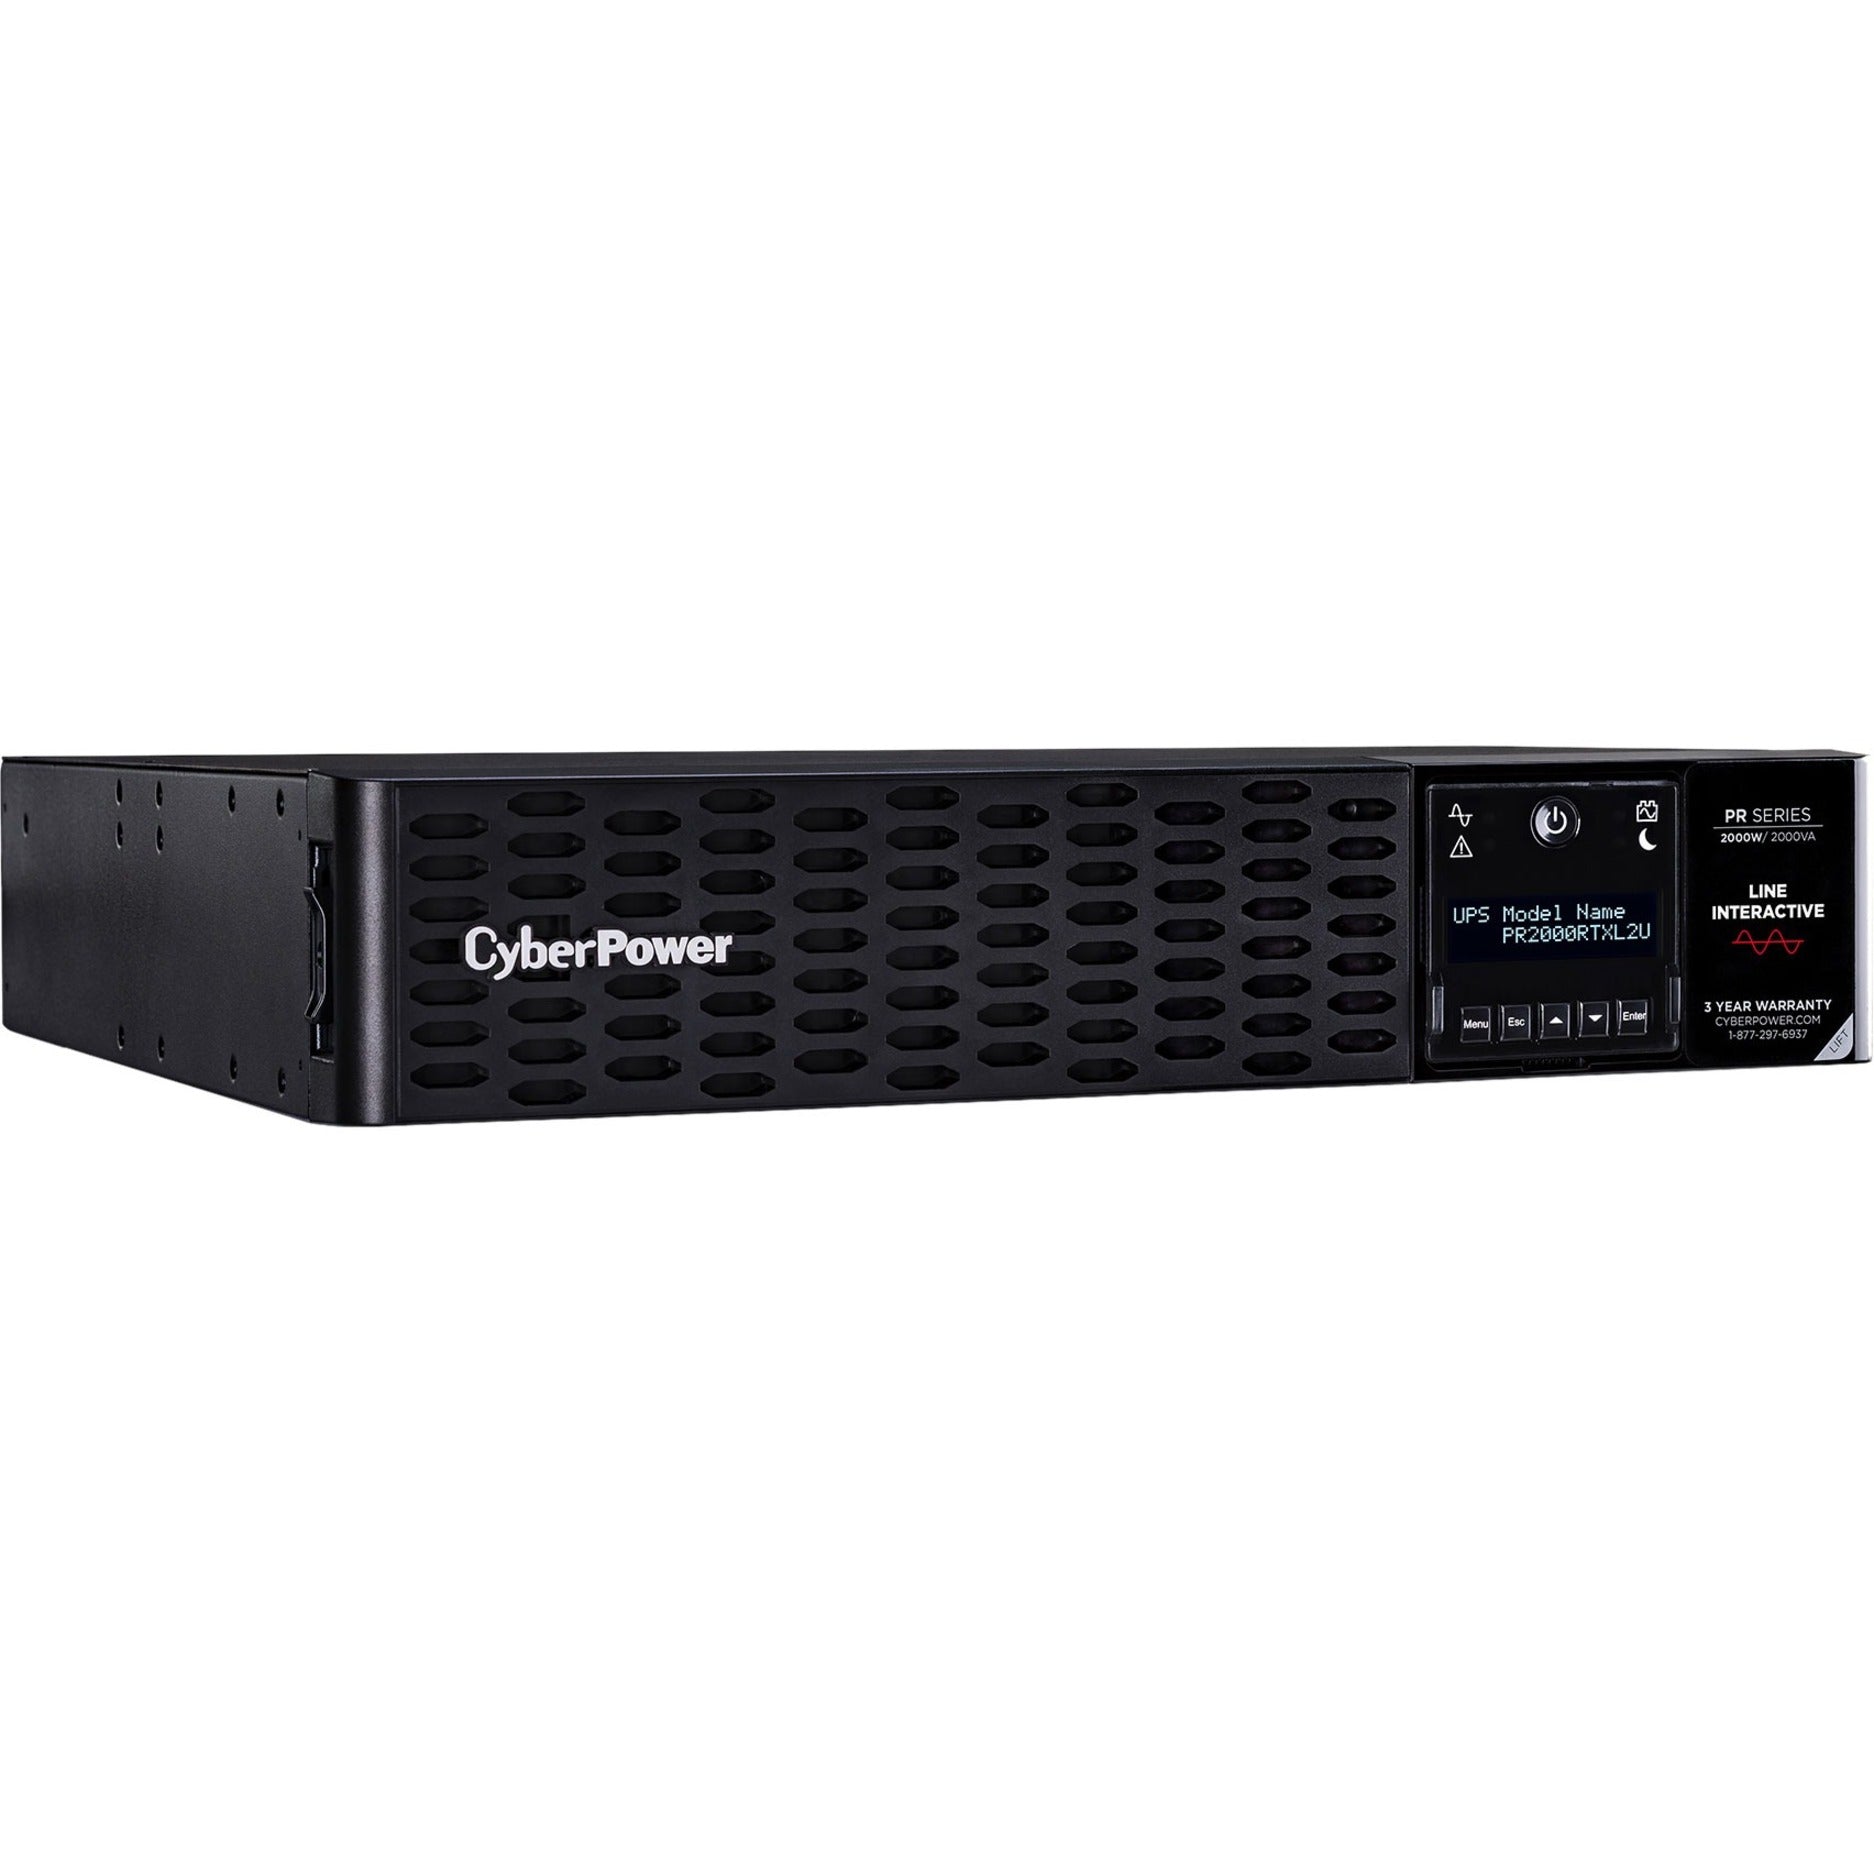 CyberPower PR2000RTXL2U New Smart App Sinewave UPS Systems, 2000 VA, 4.3 Minute Backup, Rack/Tower Convertible